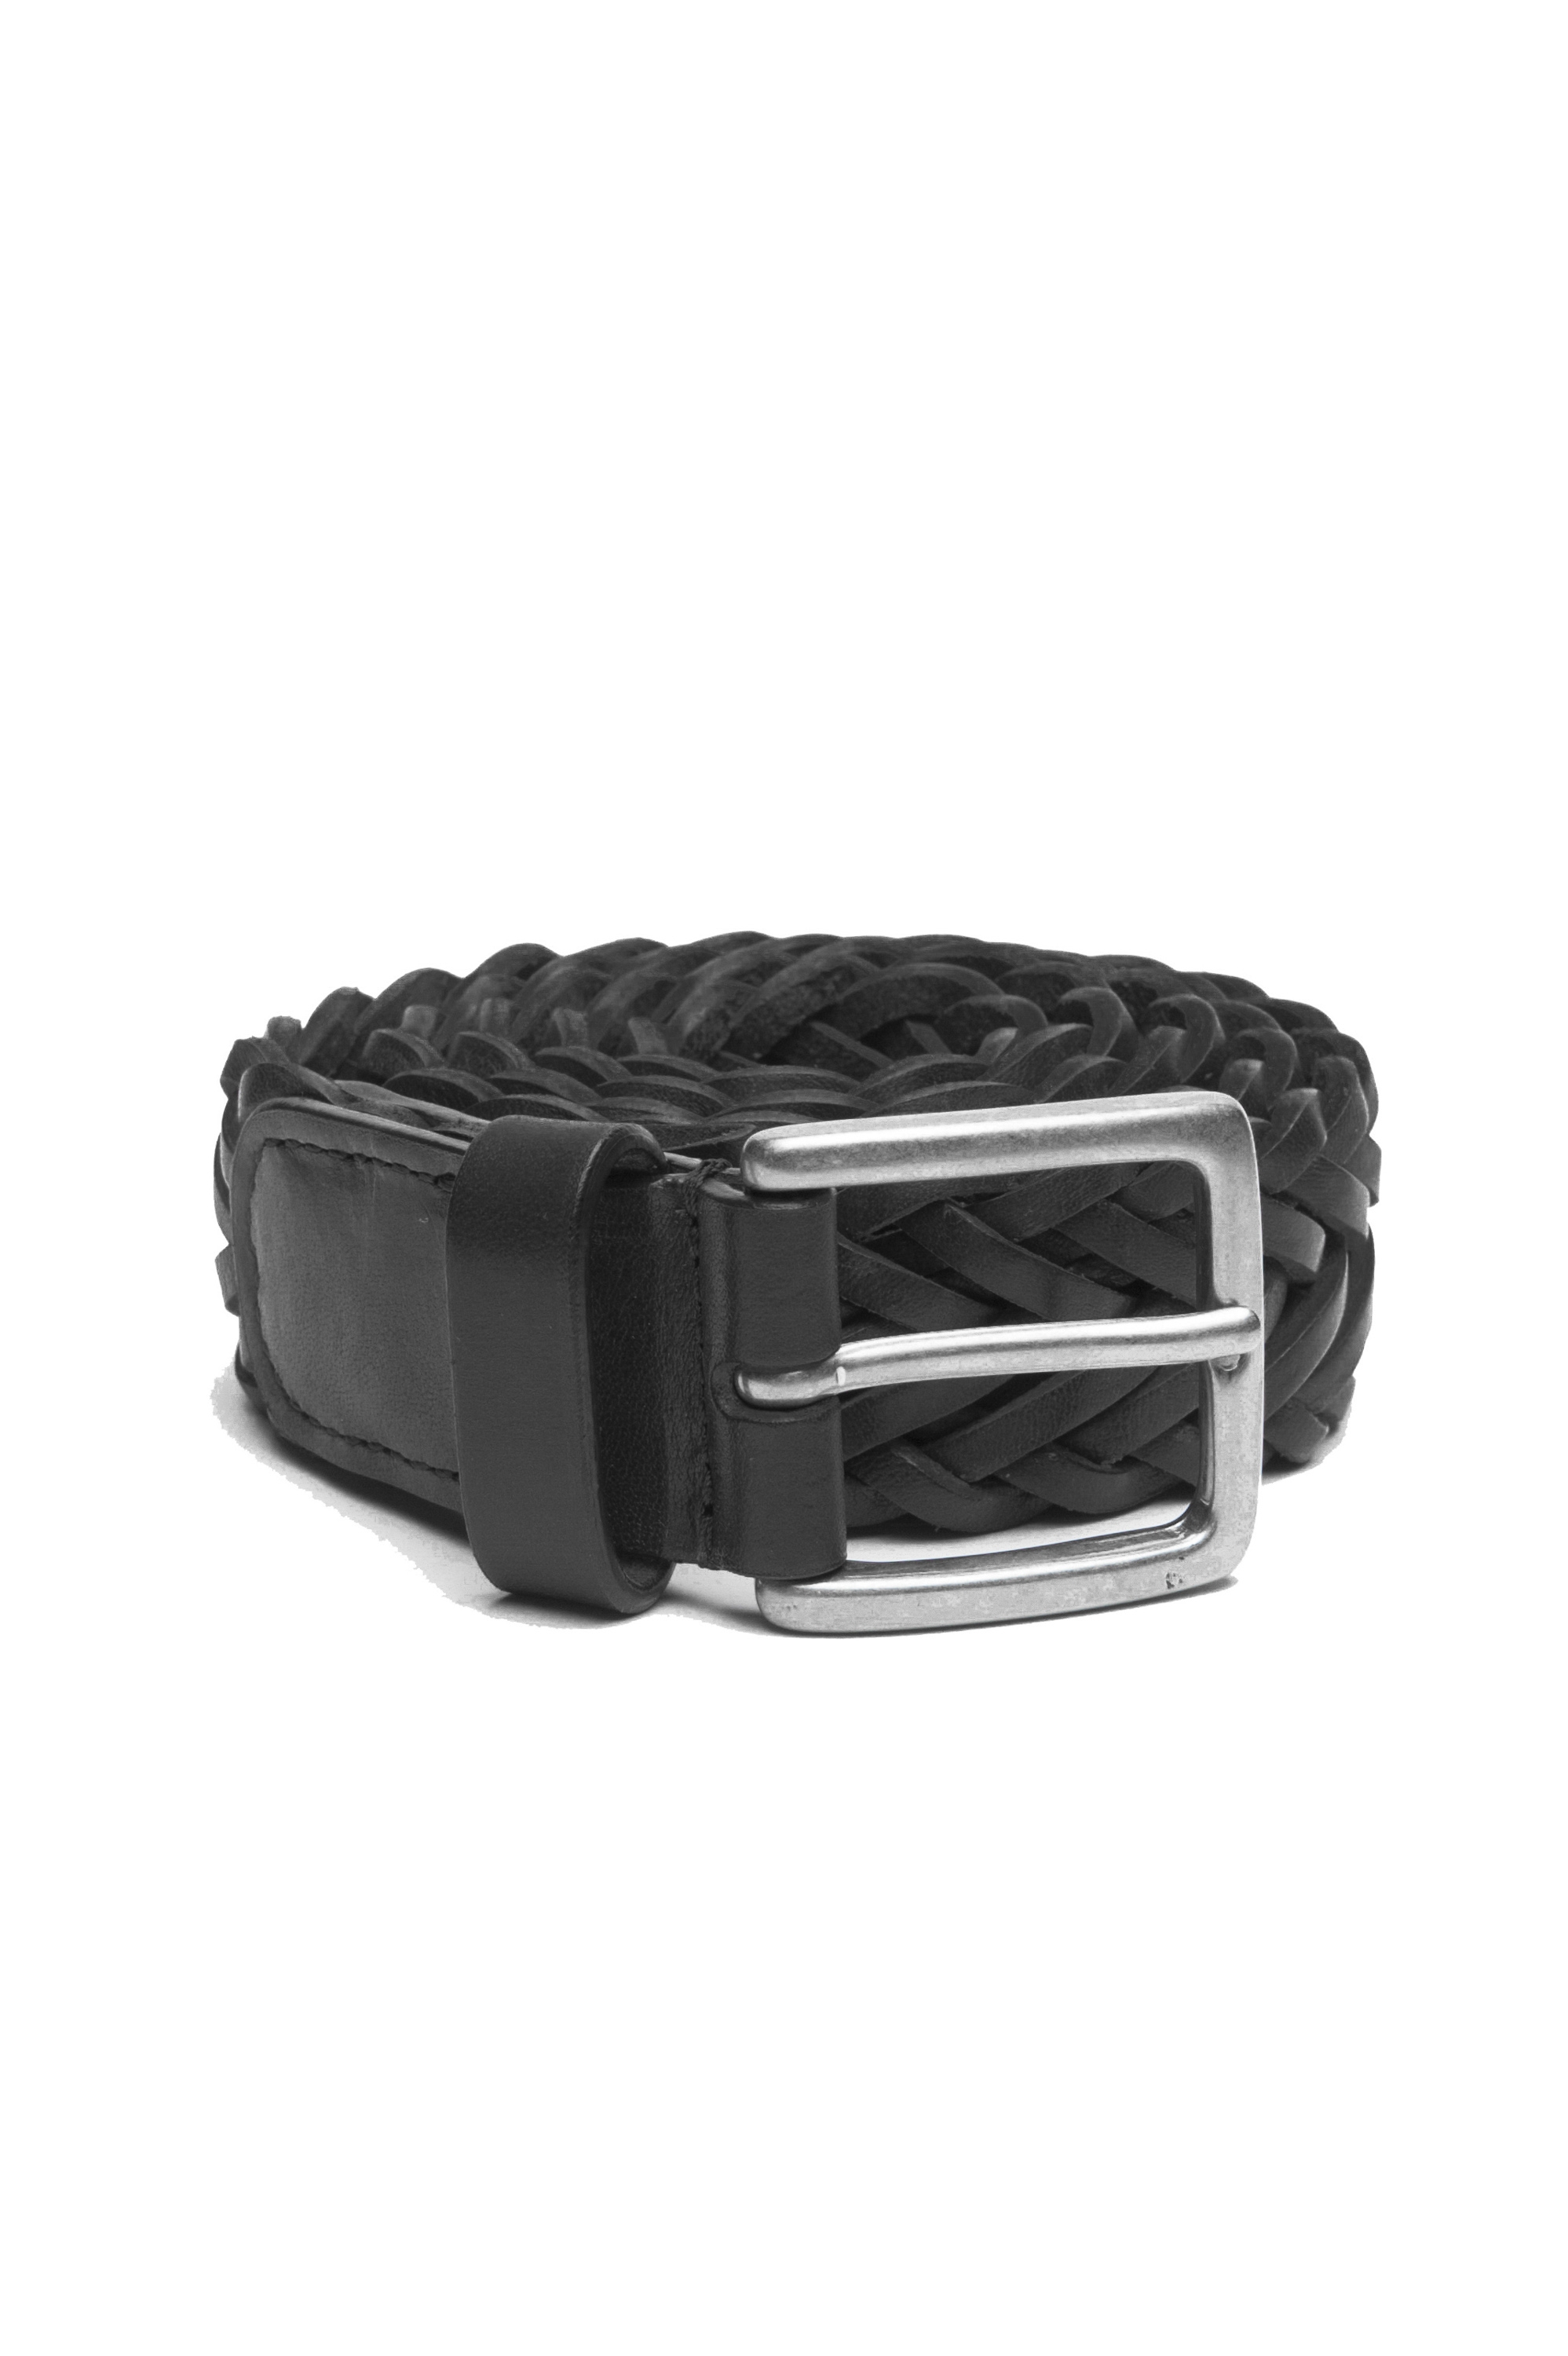 SBU 03020_2021SS Black braided leather belt 1.4 inches  01